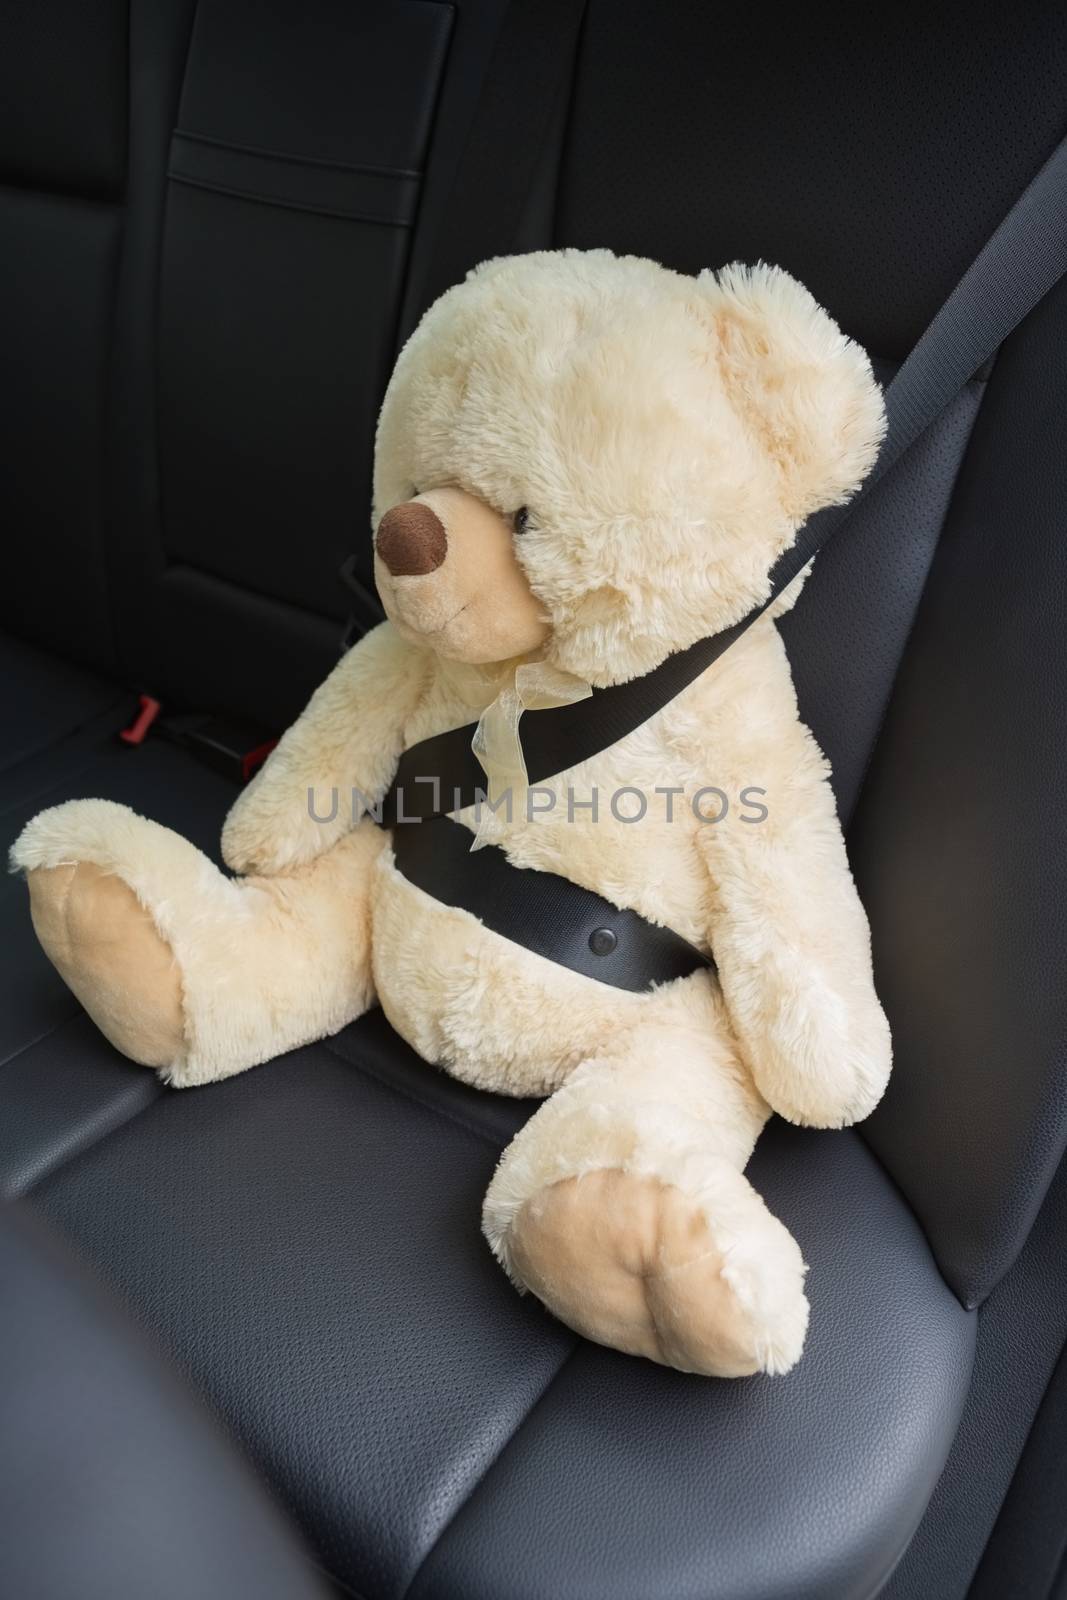 Teddy bear strapped in with seat belt  by Wavebreakmedia